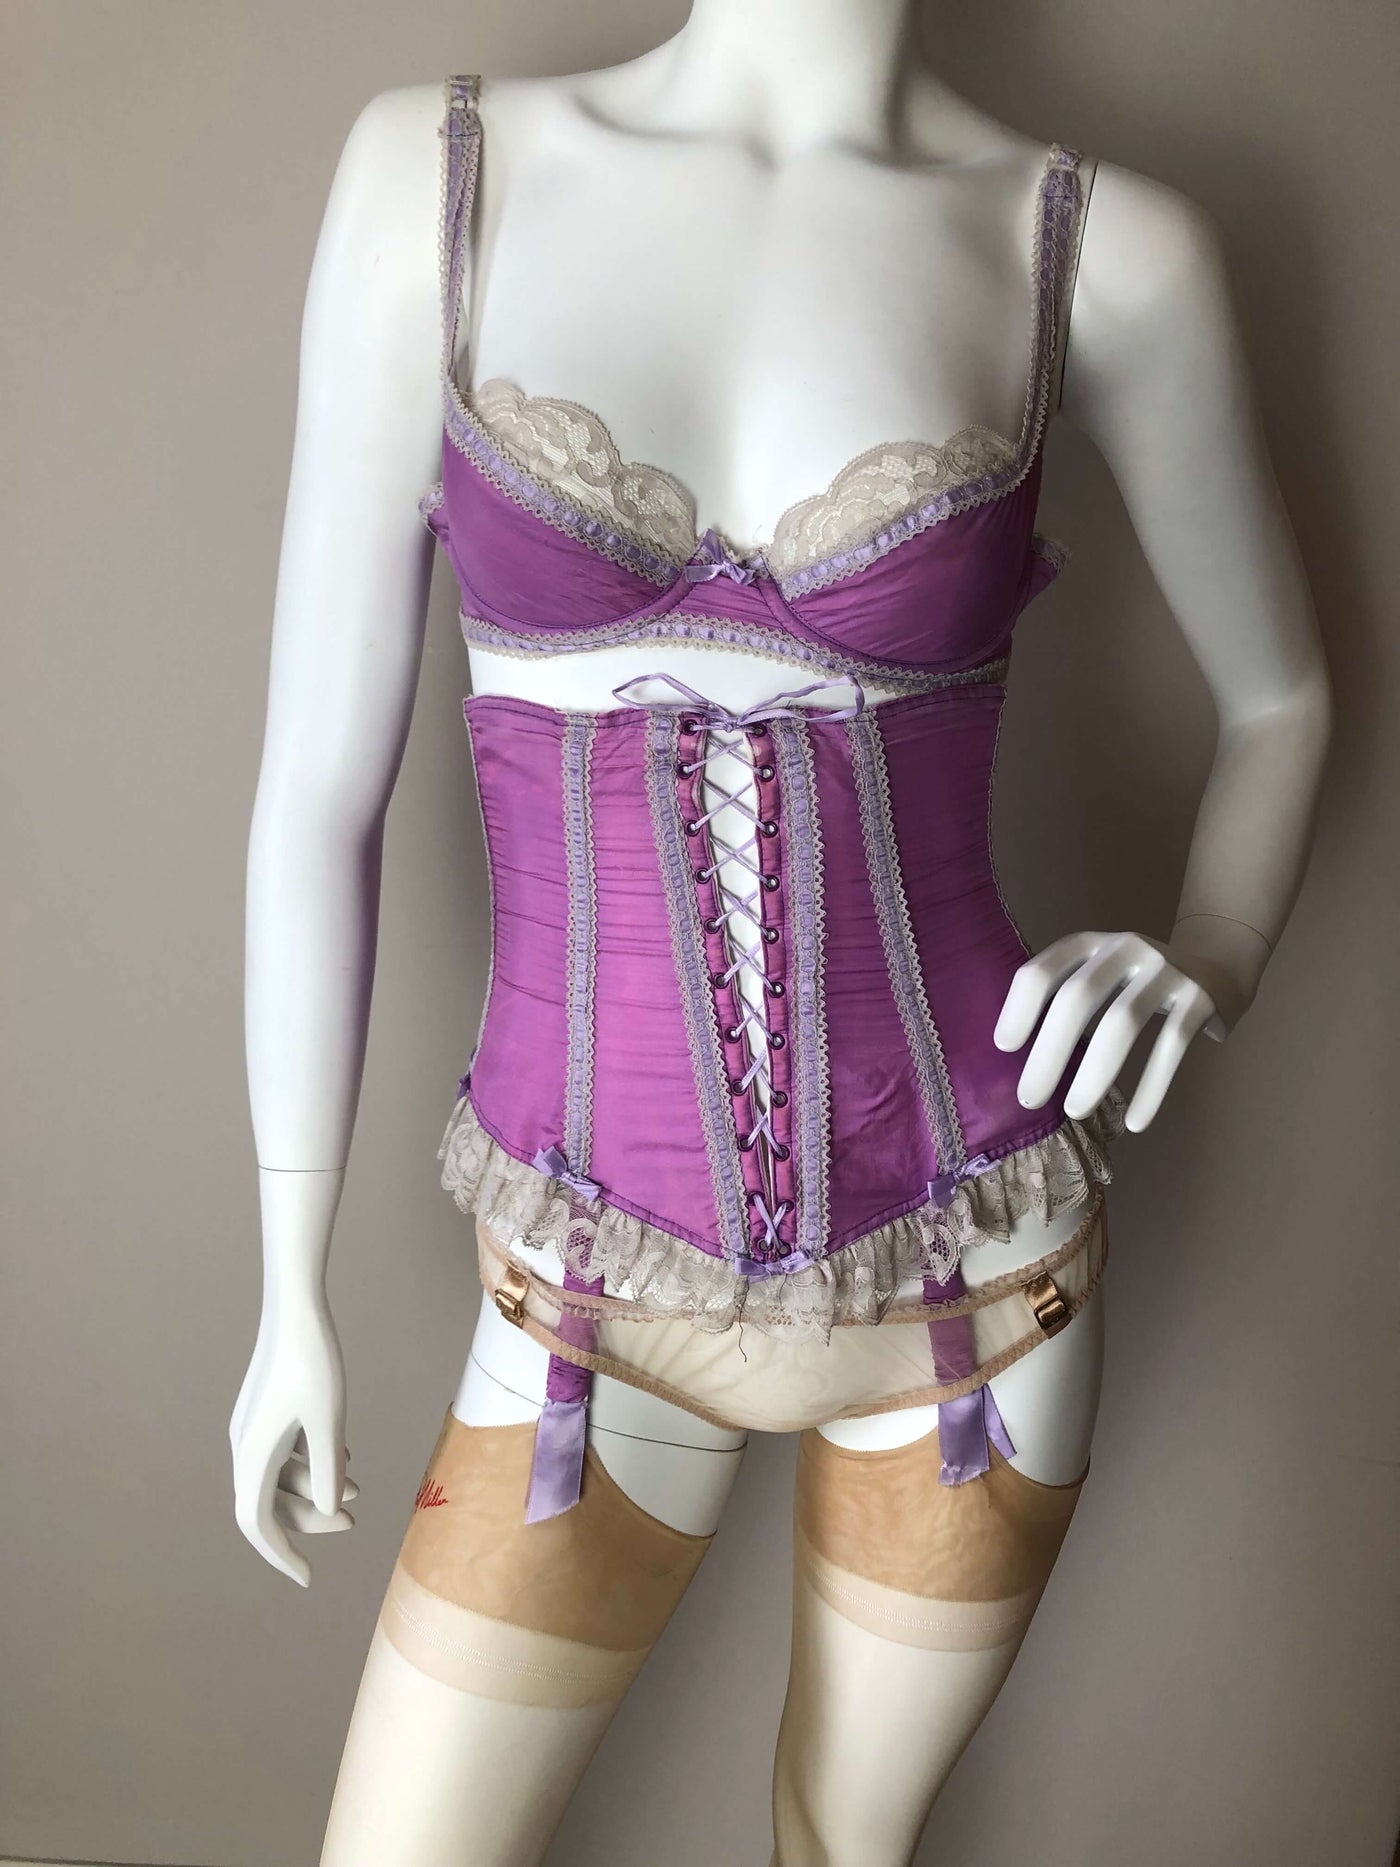 Purple corset and bra